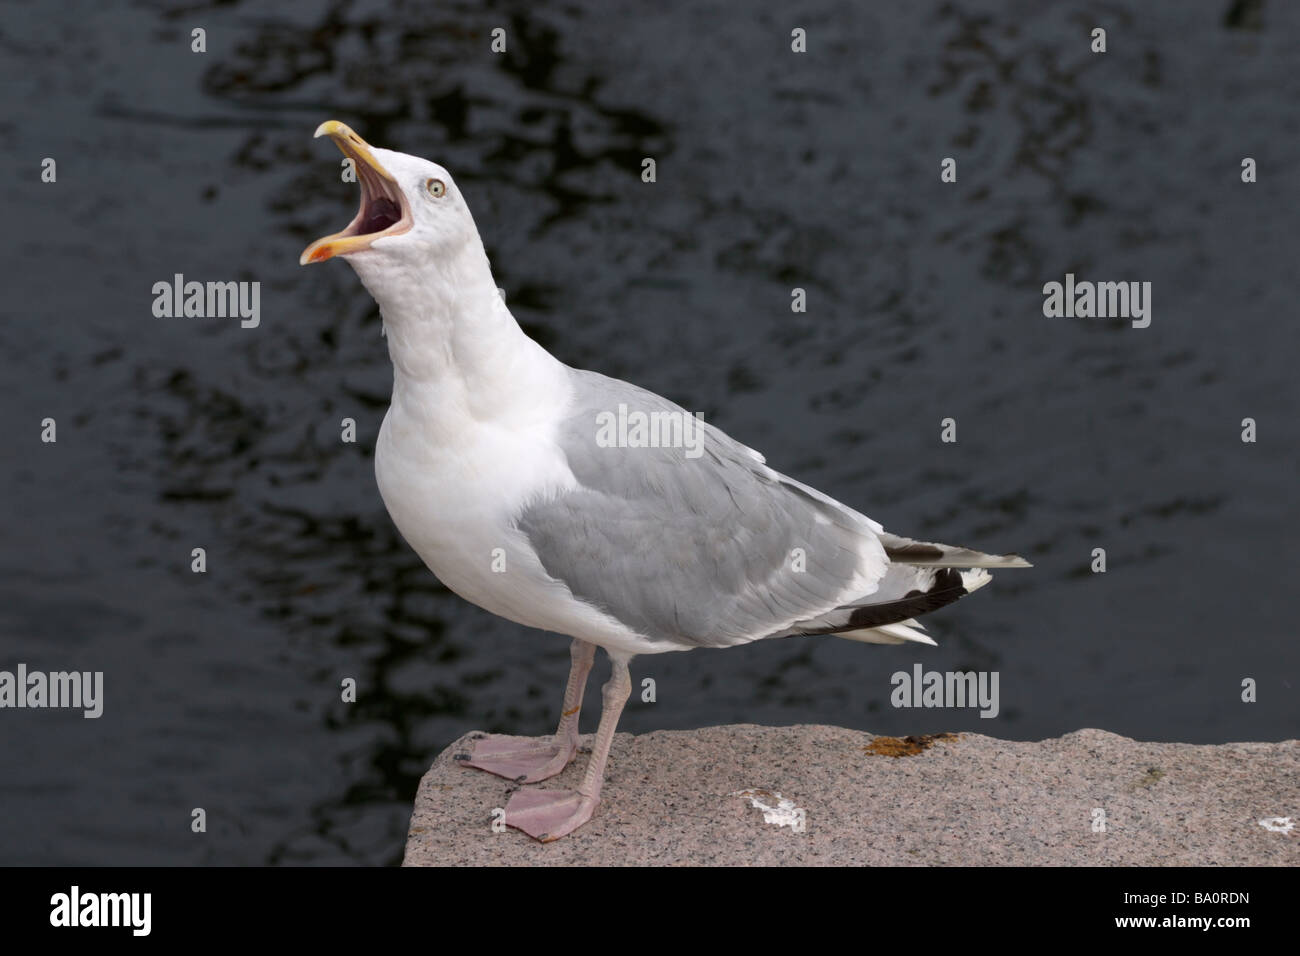 Gaviota gritando fotografías e imágenes de alta resolución - Alamy